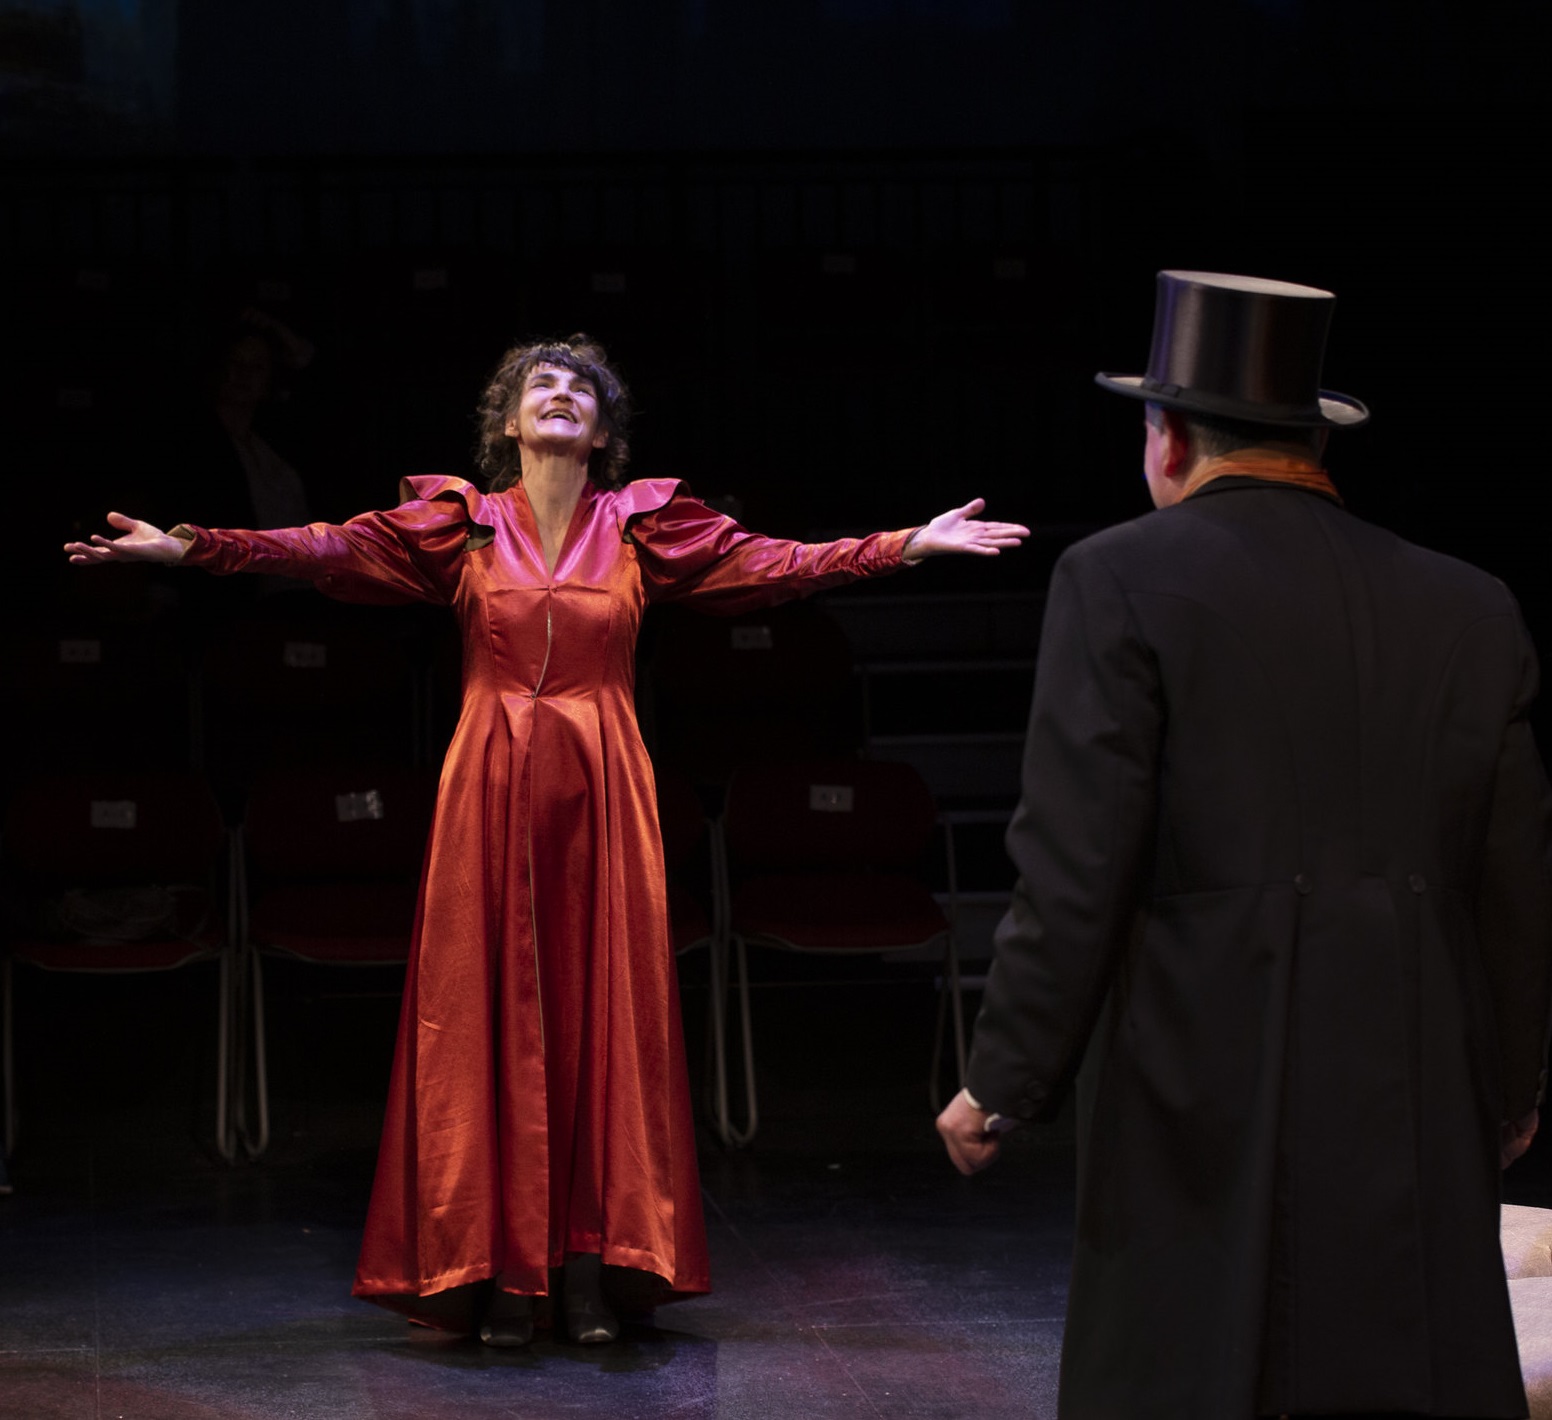 Stagestruck: The Dollar Princess – WAM Theatre premieres “Lady Randy”